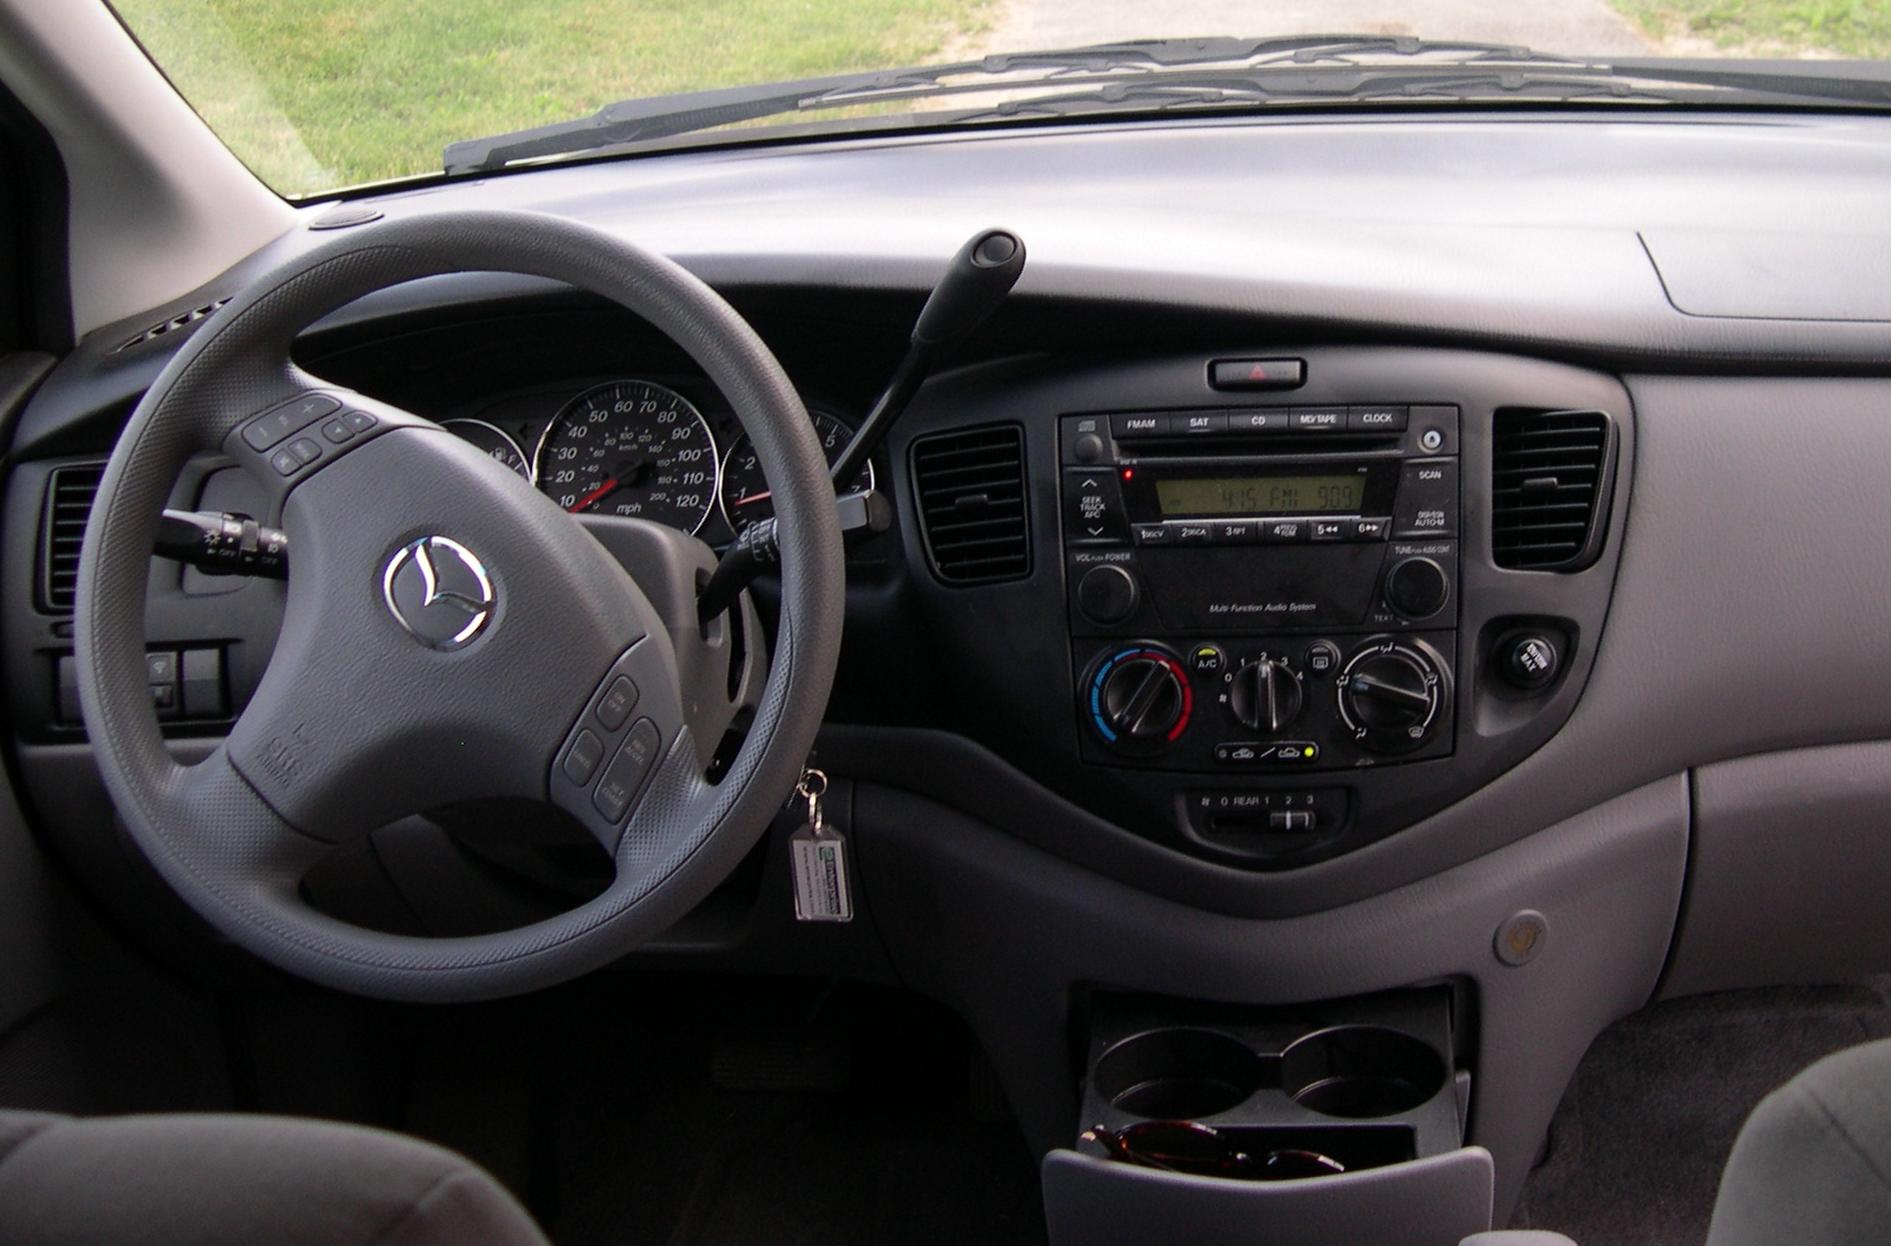 File:2005 Mazda MPV dashboard.jpg - Wikimedia Commons